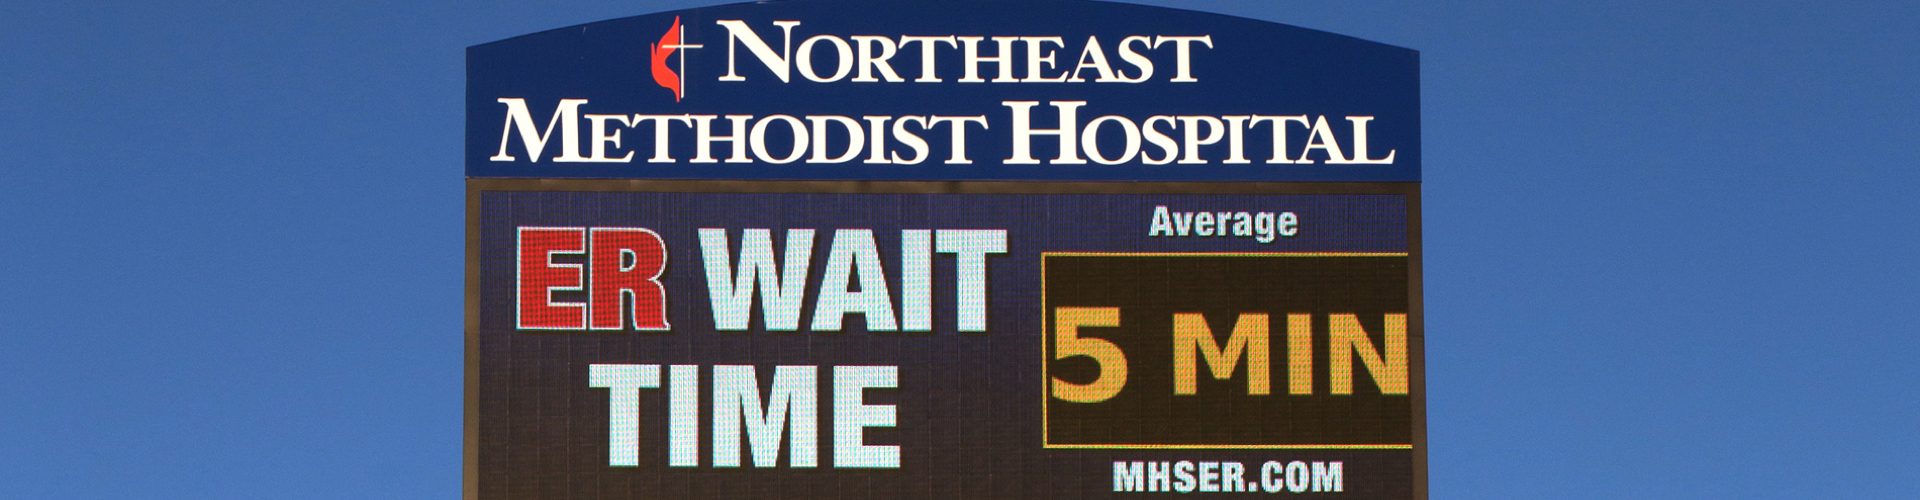 NortheastMethodist-header